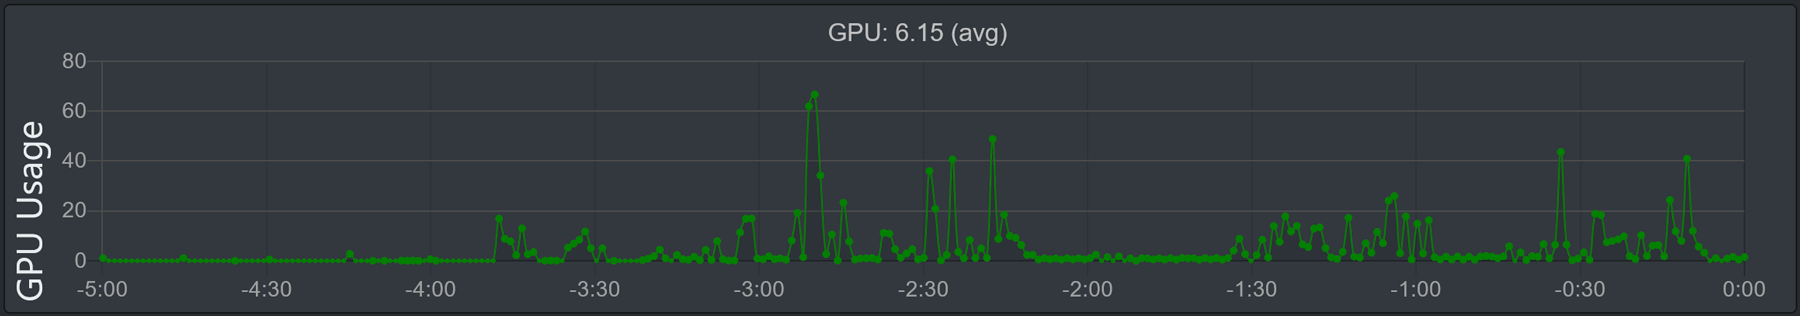 Gambar grafik 'Penggunaan GPU'